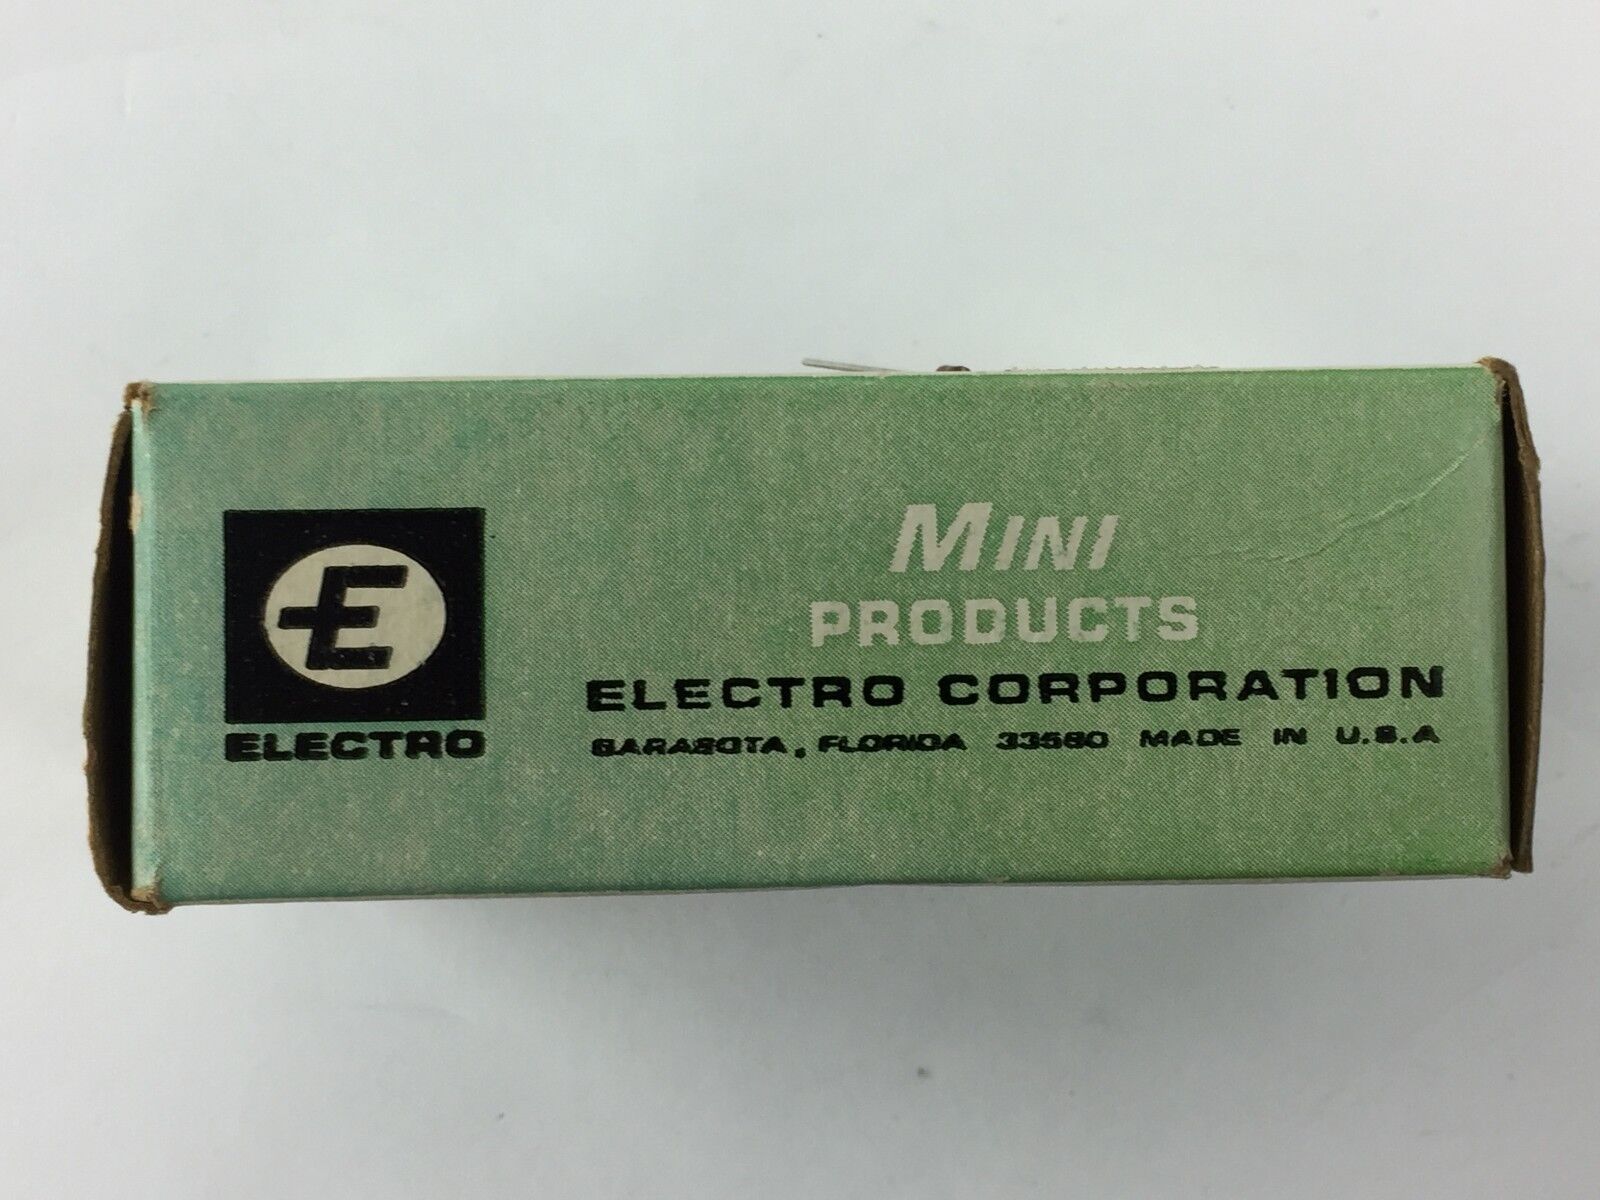 Electro Corporation Mini Prox II Model 55141B 115Vac / 24Vdc Proximity Module